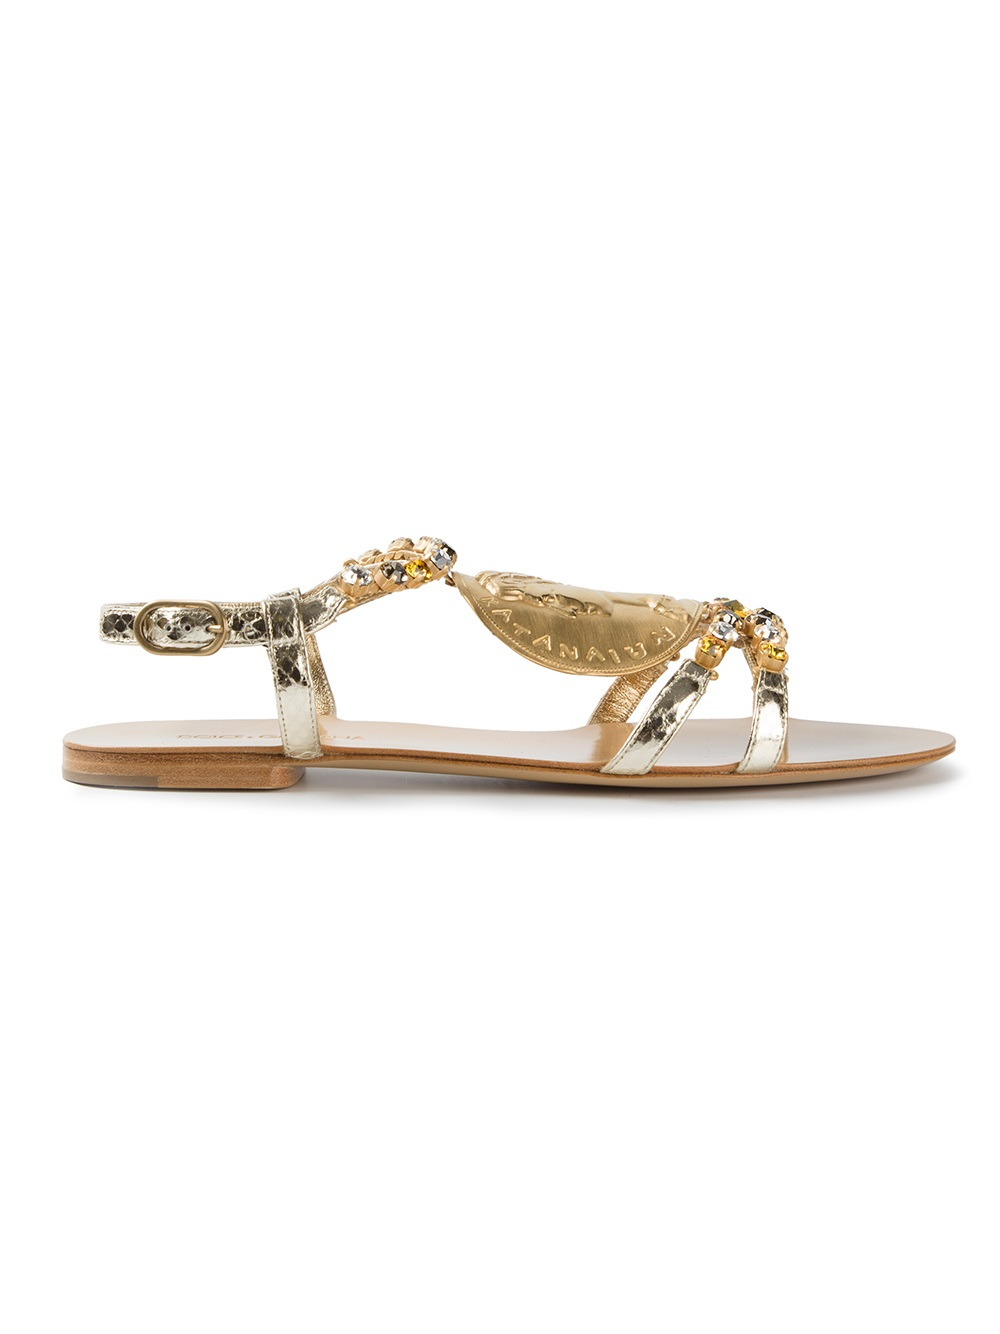 Dolce & Gabbana Embellished Flat Sandals in Metallic - Lyst